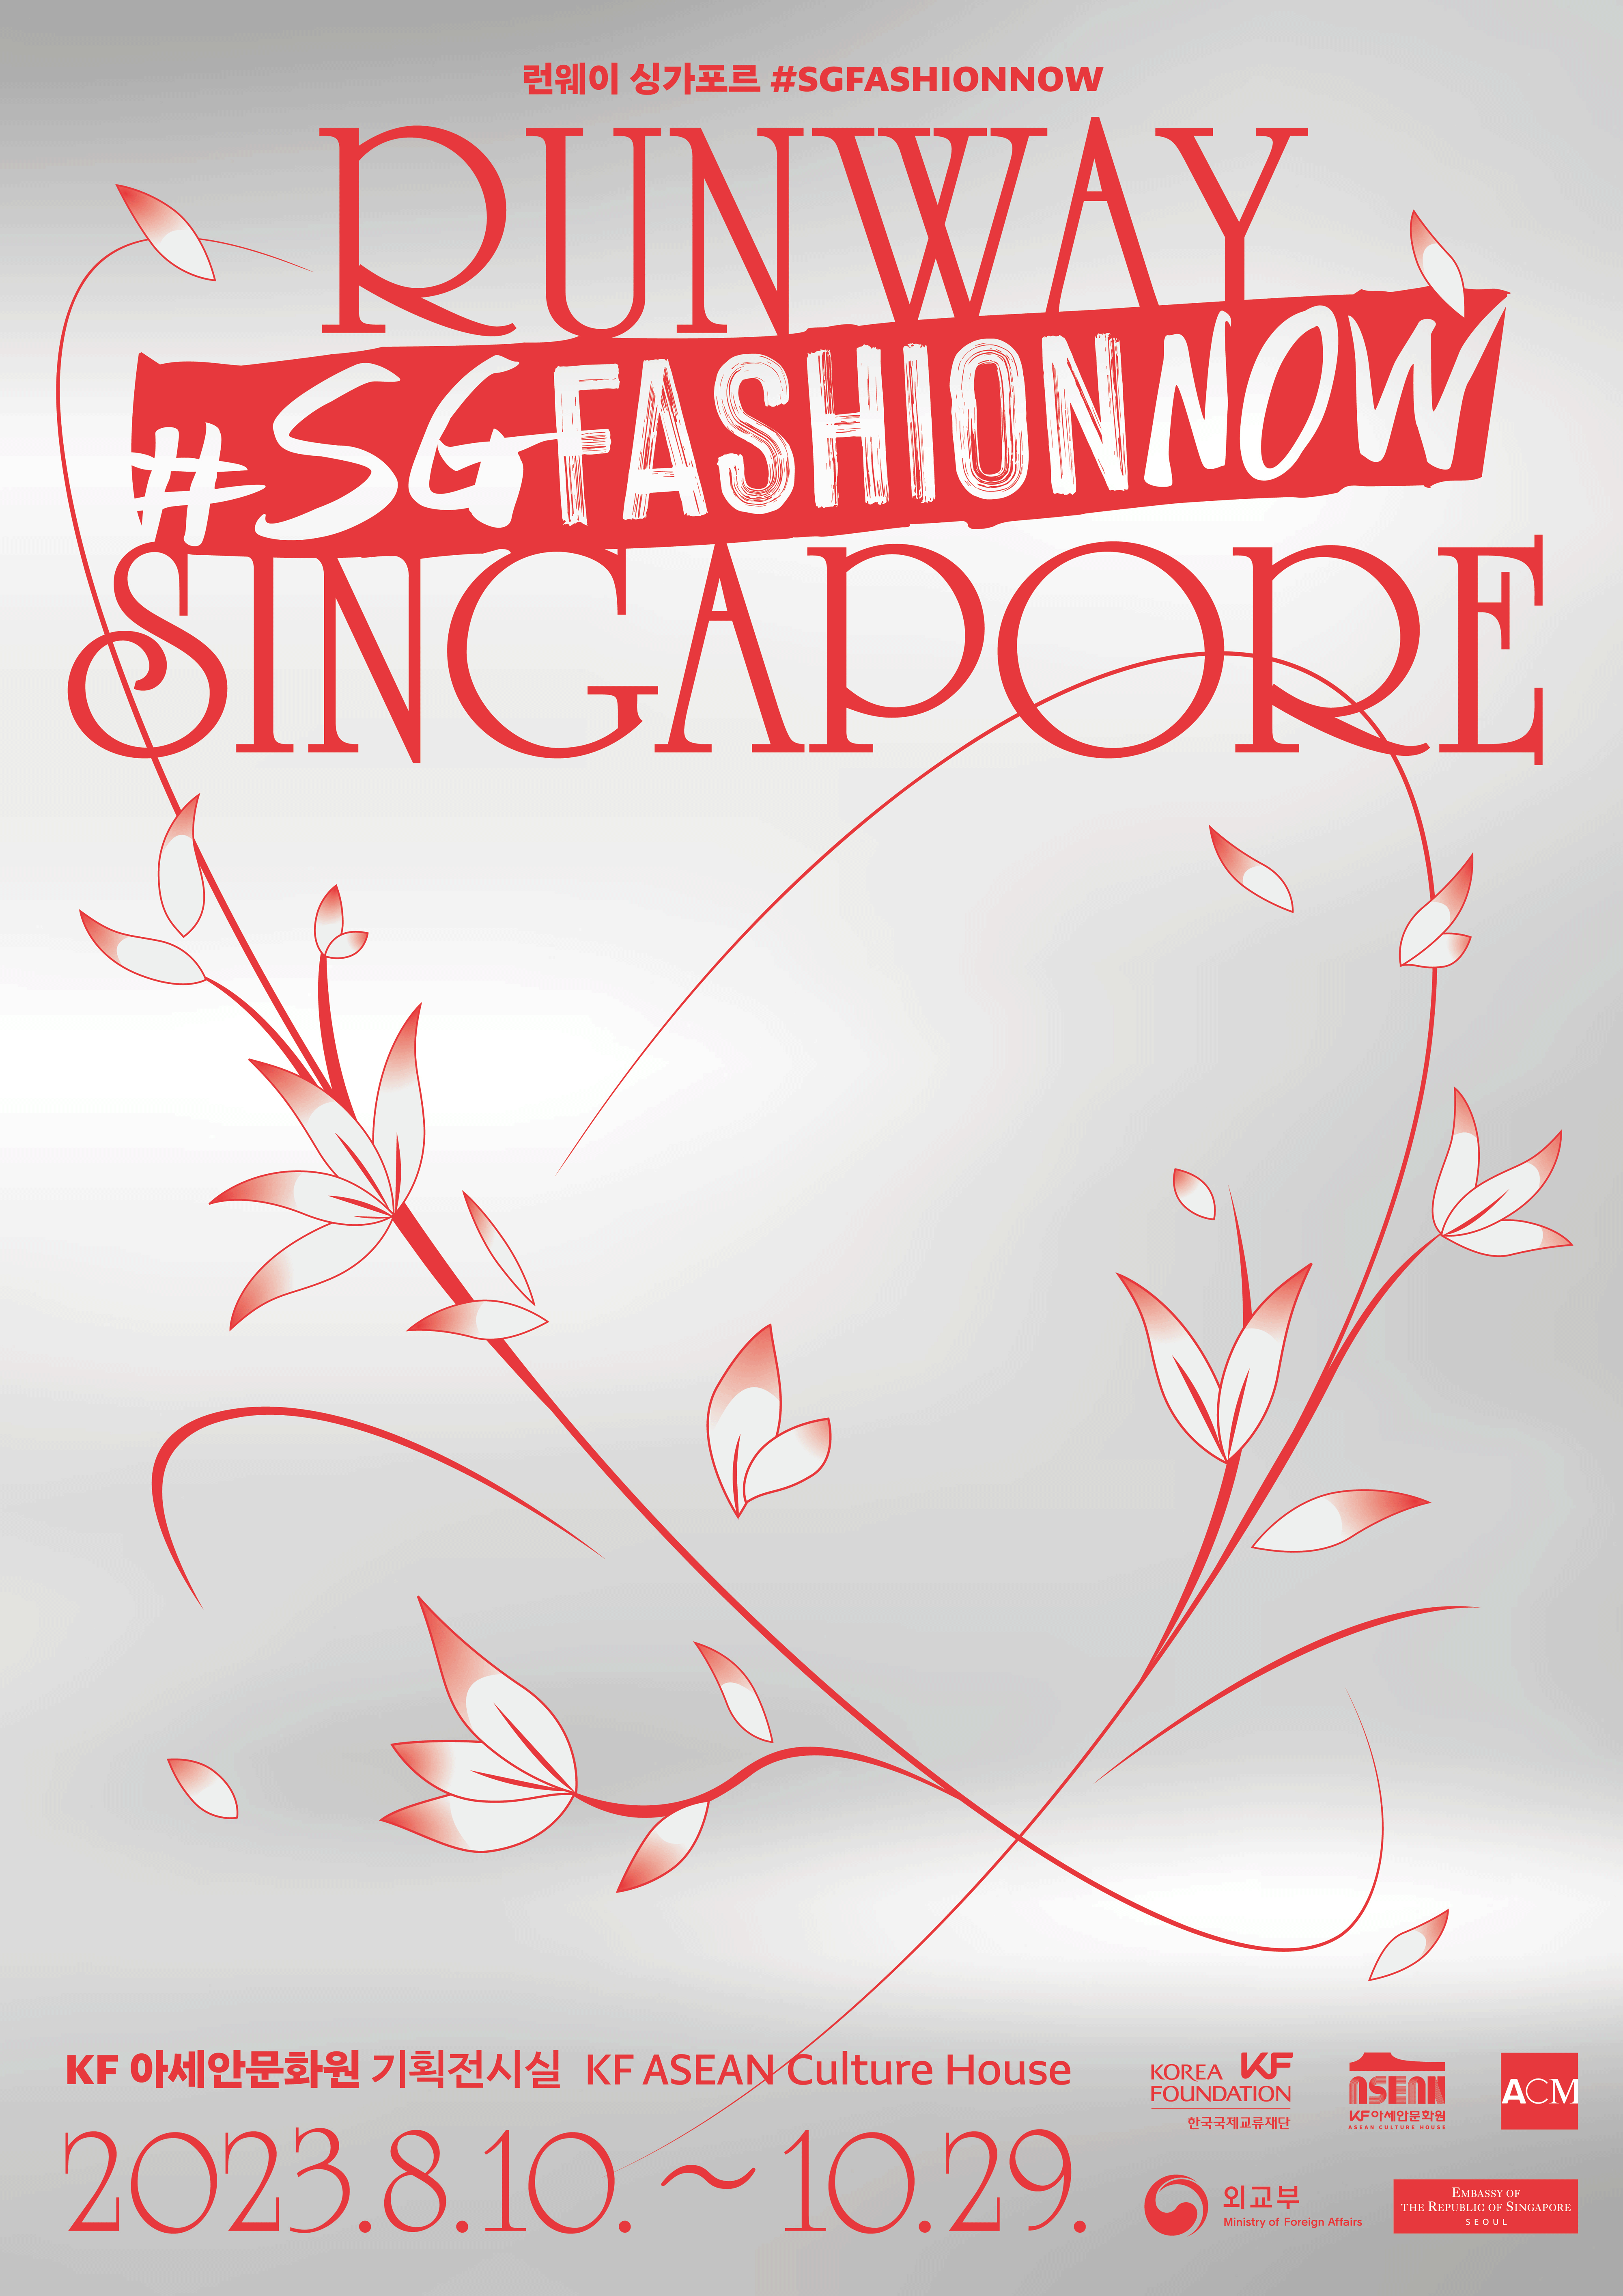 Runwasy Singapore #SGAFASHIONNOW